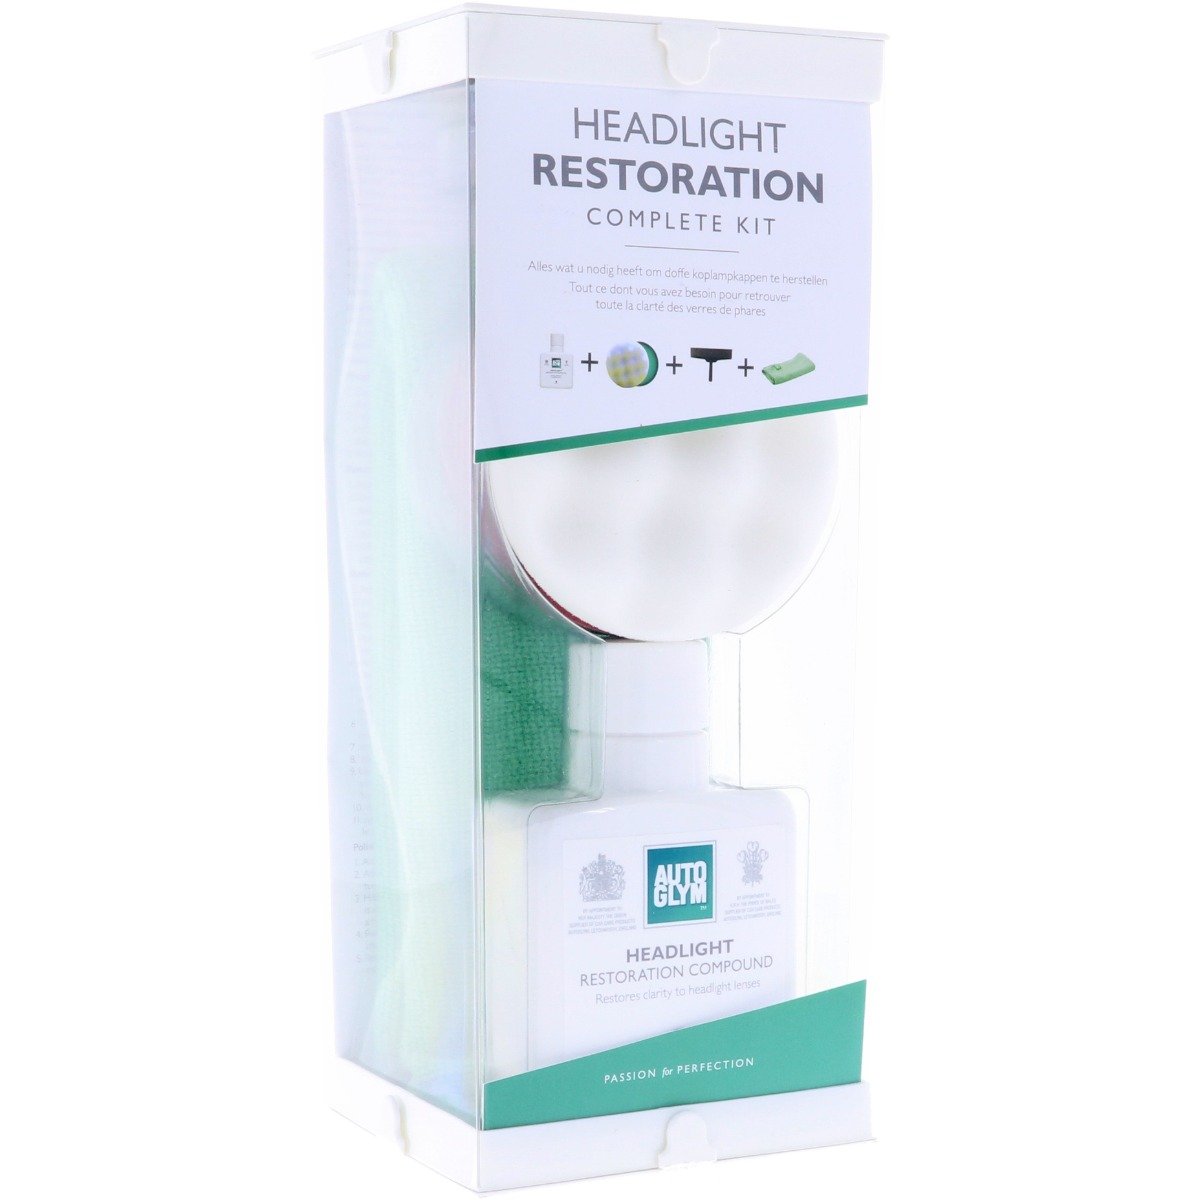 Headlight Restoration Complete Kit